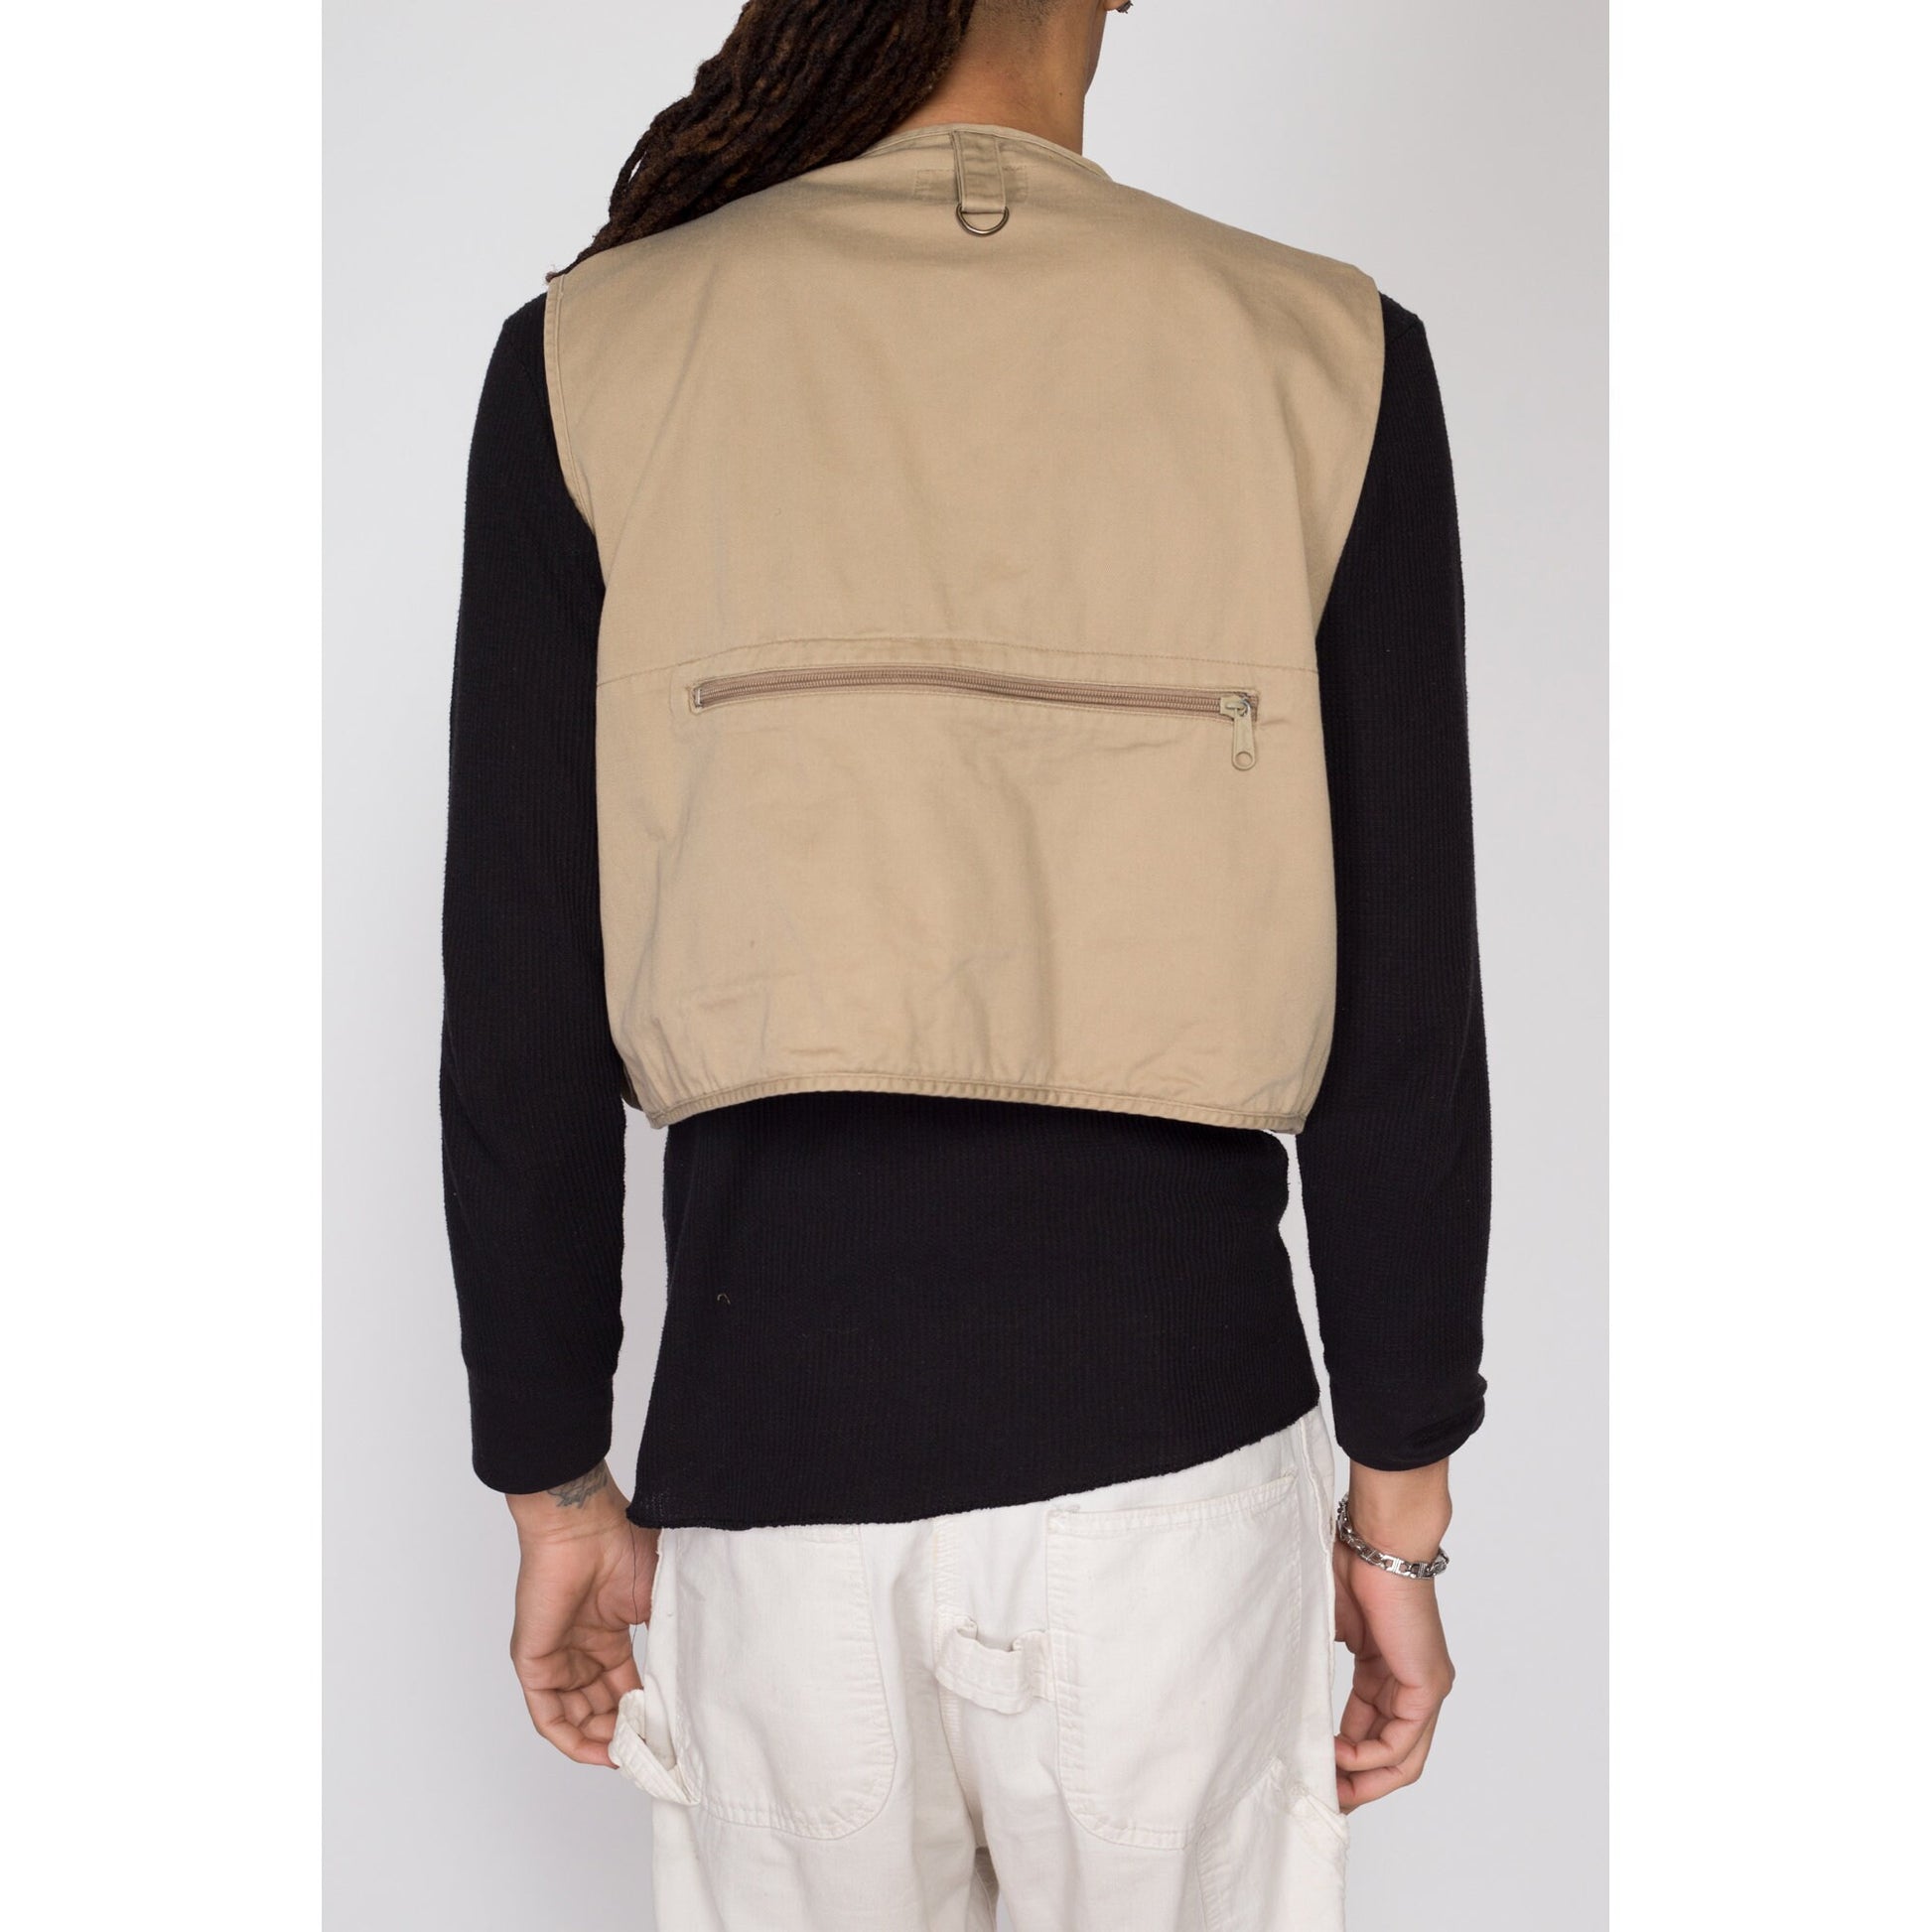 Medium 80s Khaki Fishing Tackle Vest | Vintage Zip Up Sleeveless Workwear Field Jacket